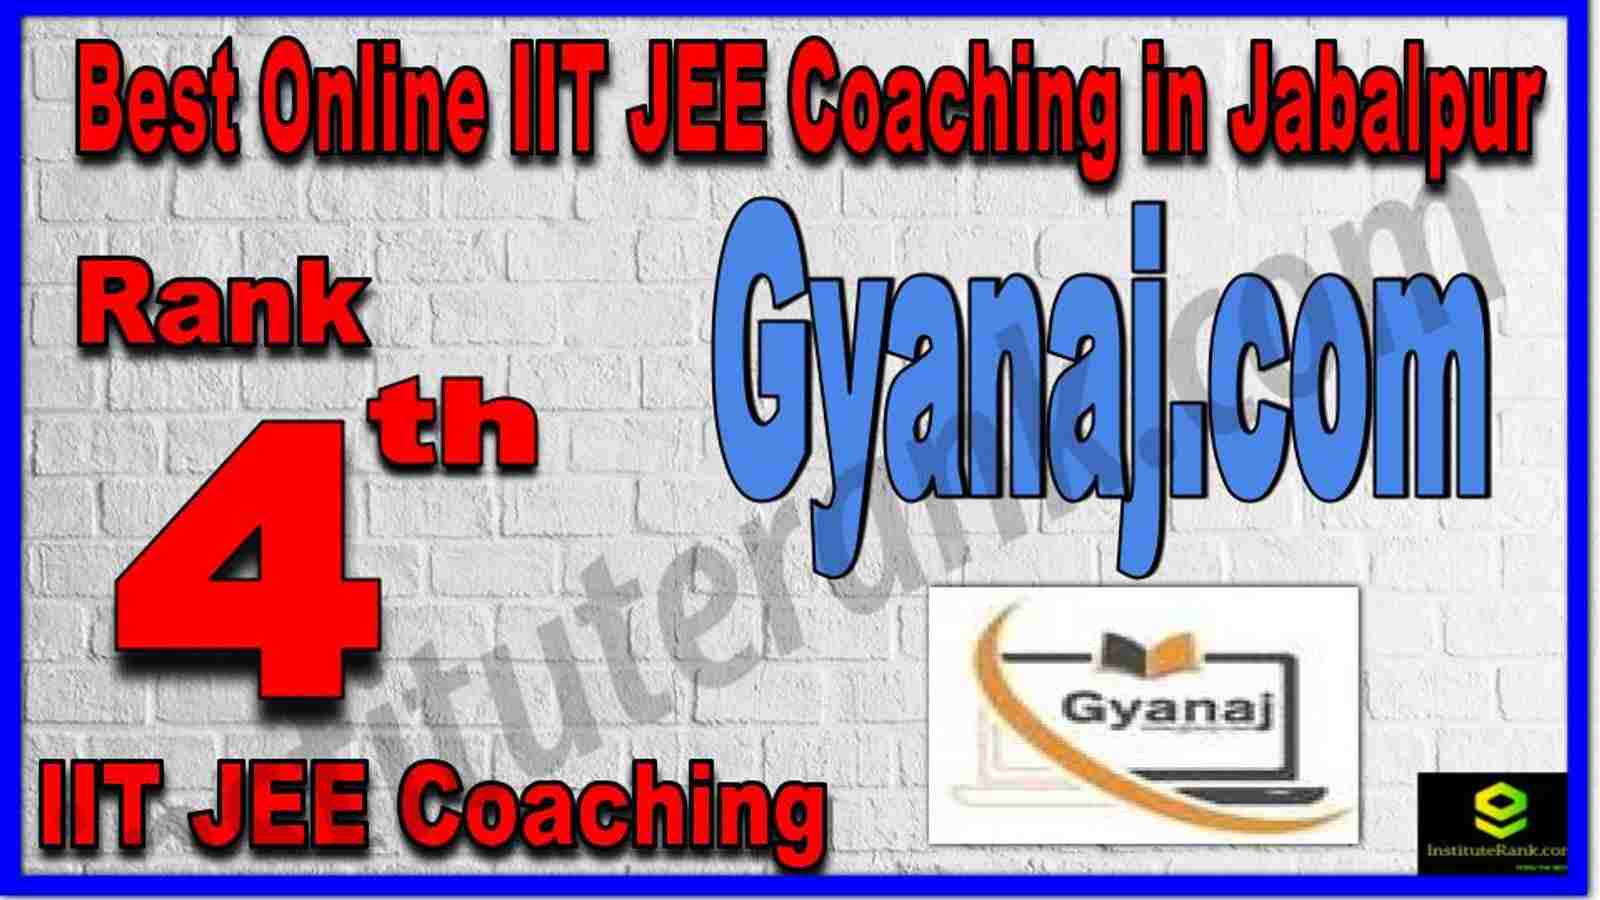 Rank 4th Best Online IIT JEE Coaching in Jabalpur